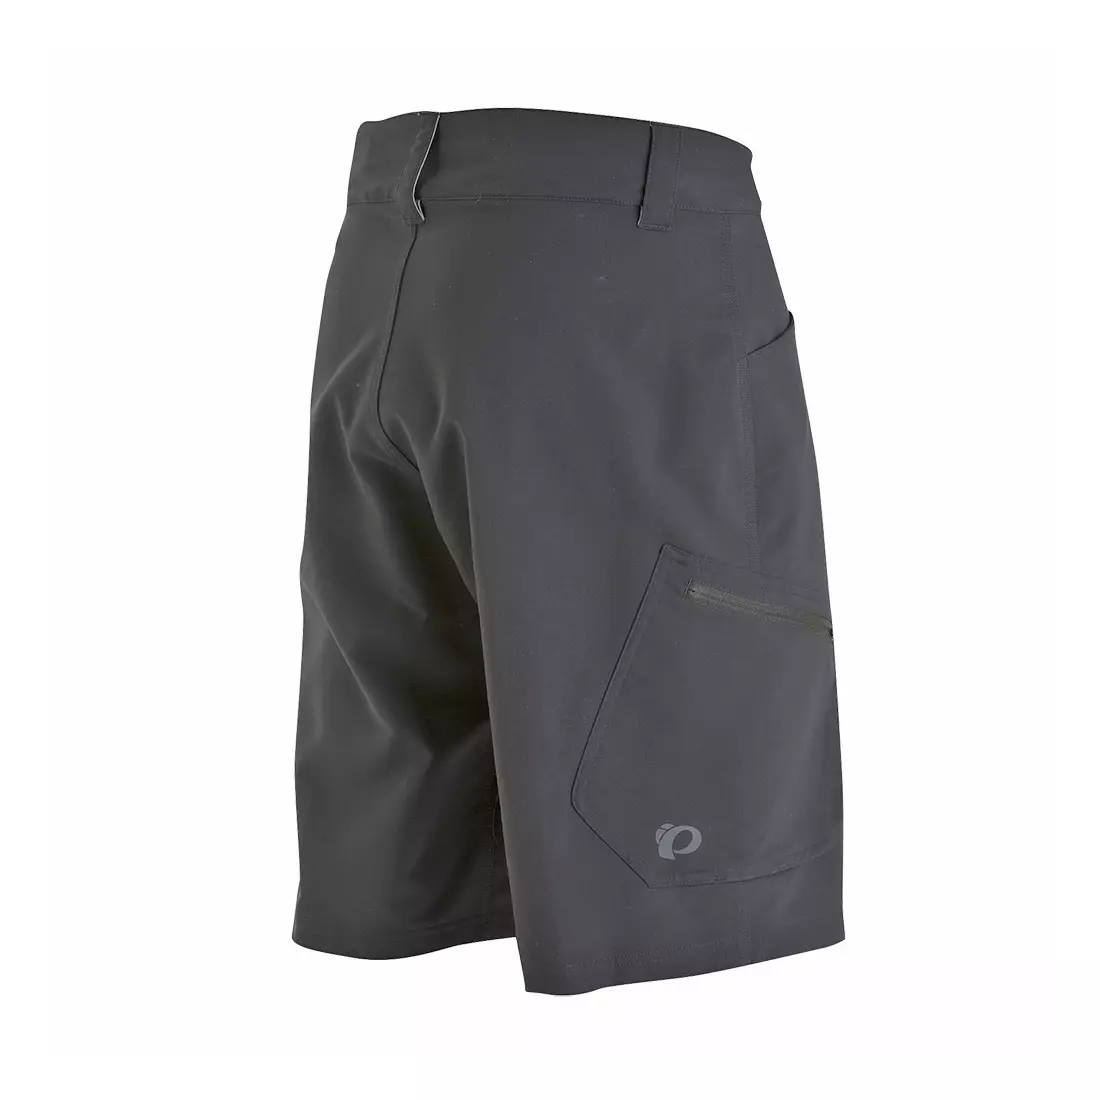 PEARL IZUMI CANYON men's cycling shorts + boxer shorts with insert 19111603-021 black